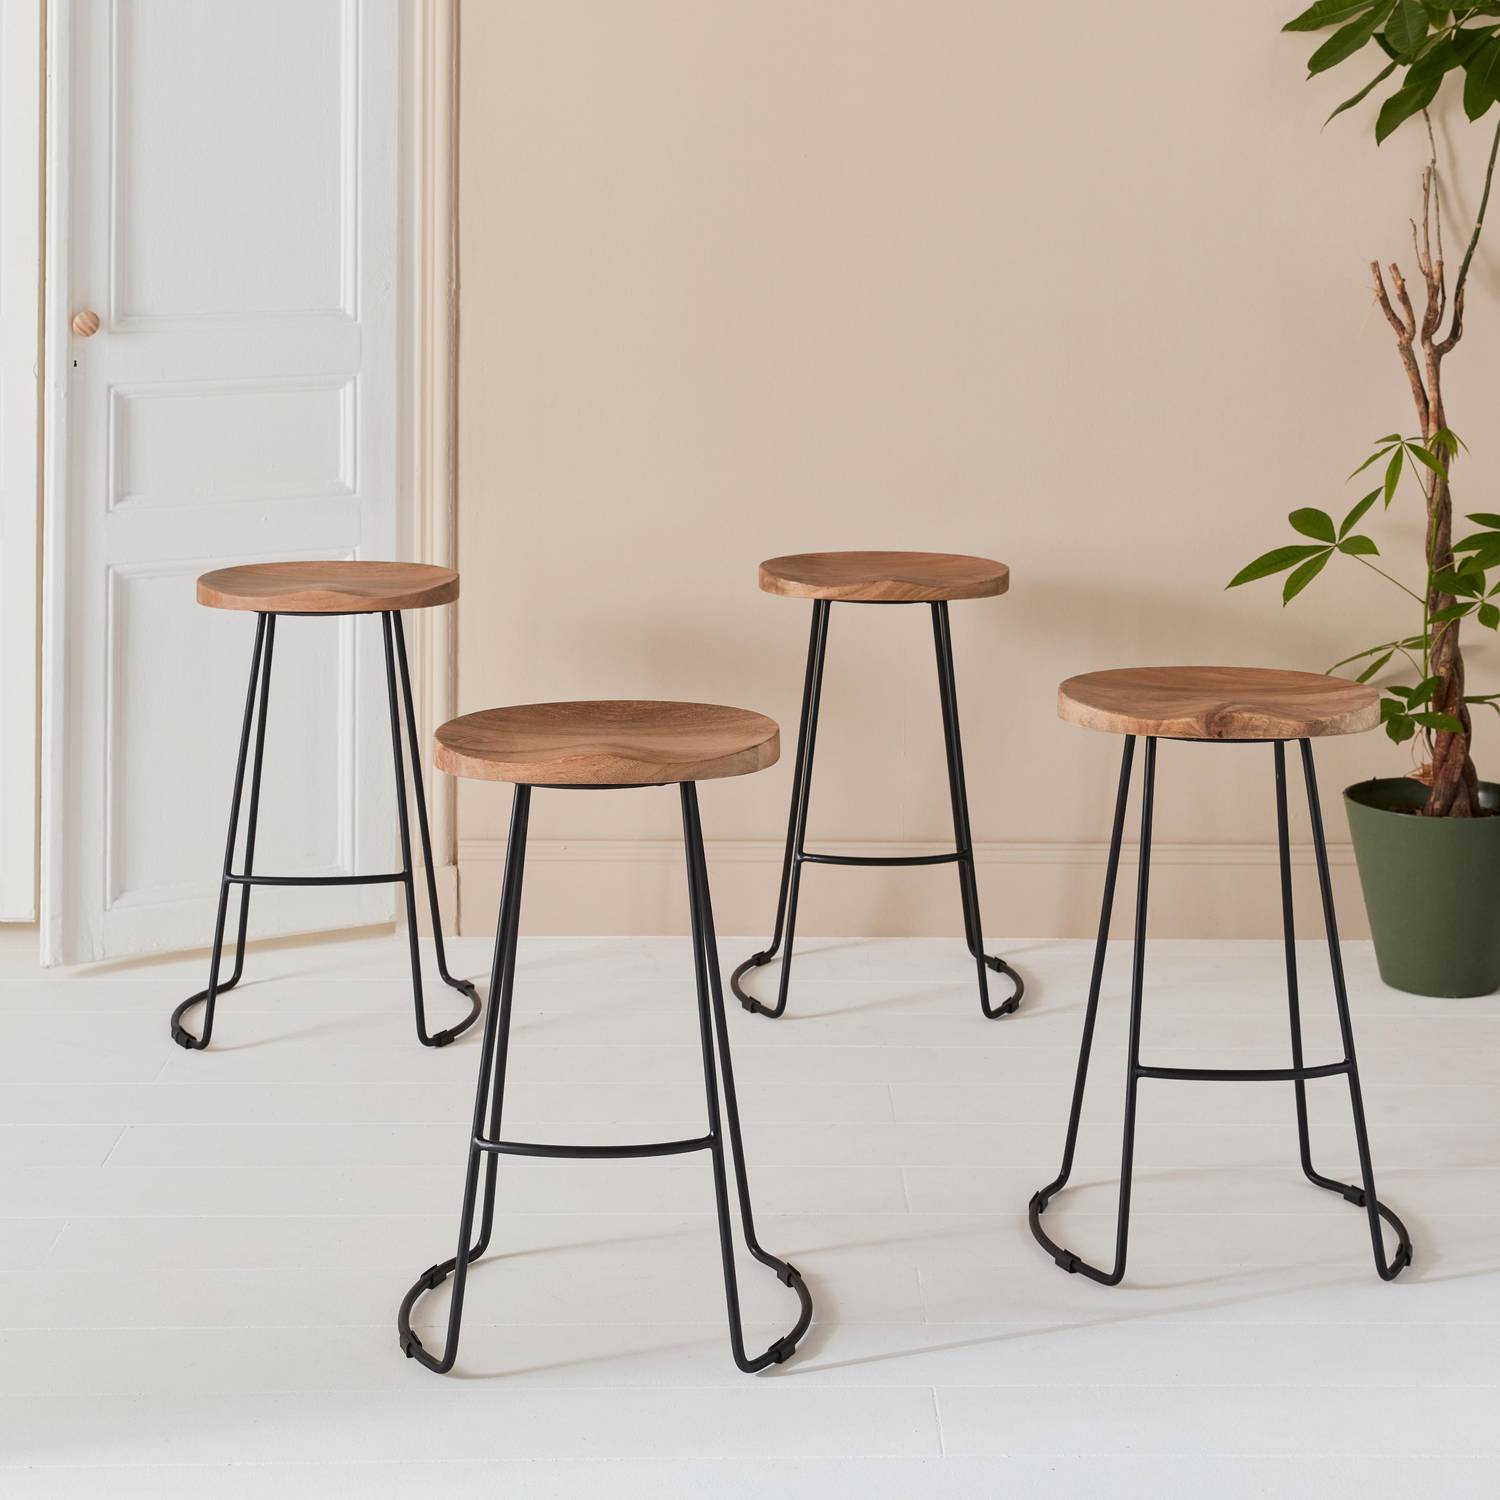 Set of 4 industrial metal and wooden bar stools, 44x36x65cm, Jaya, Mango wood seat, black metal legs Photo2